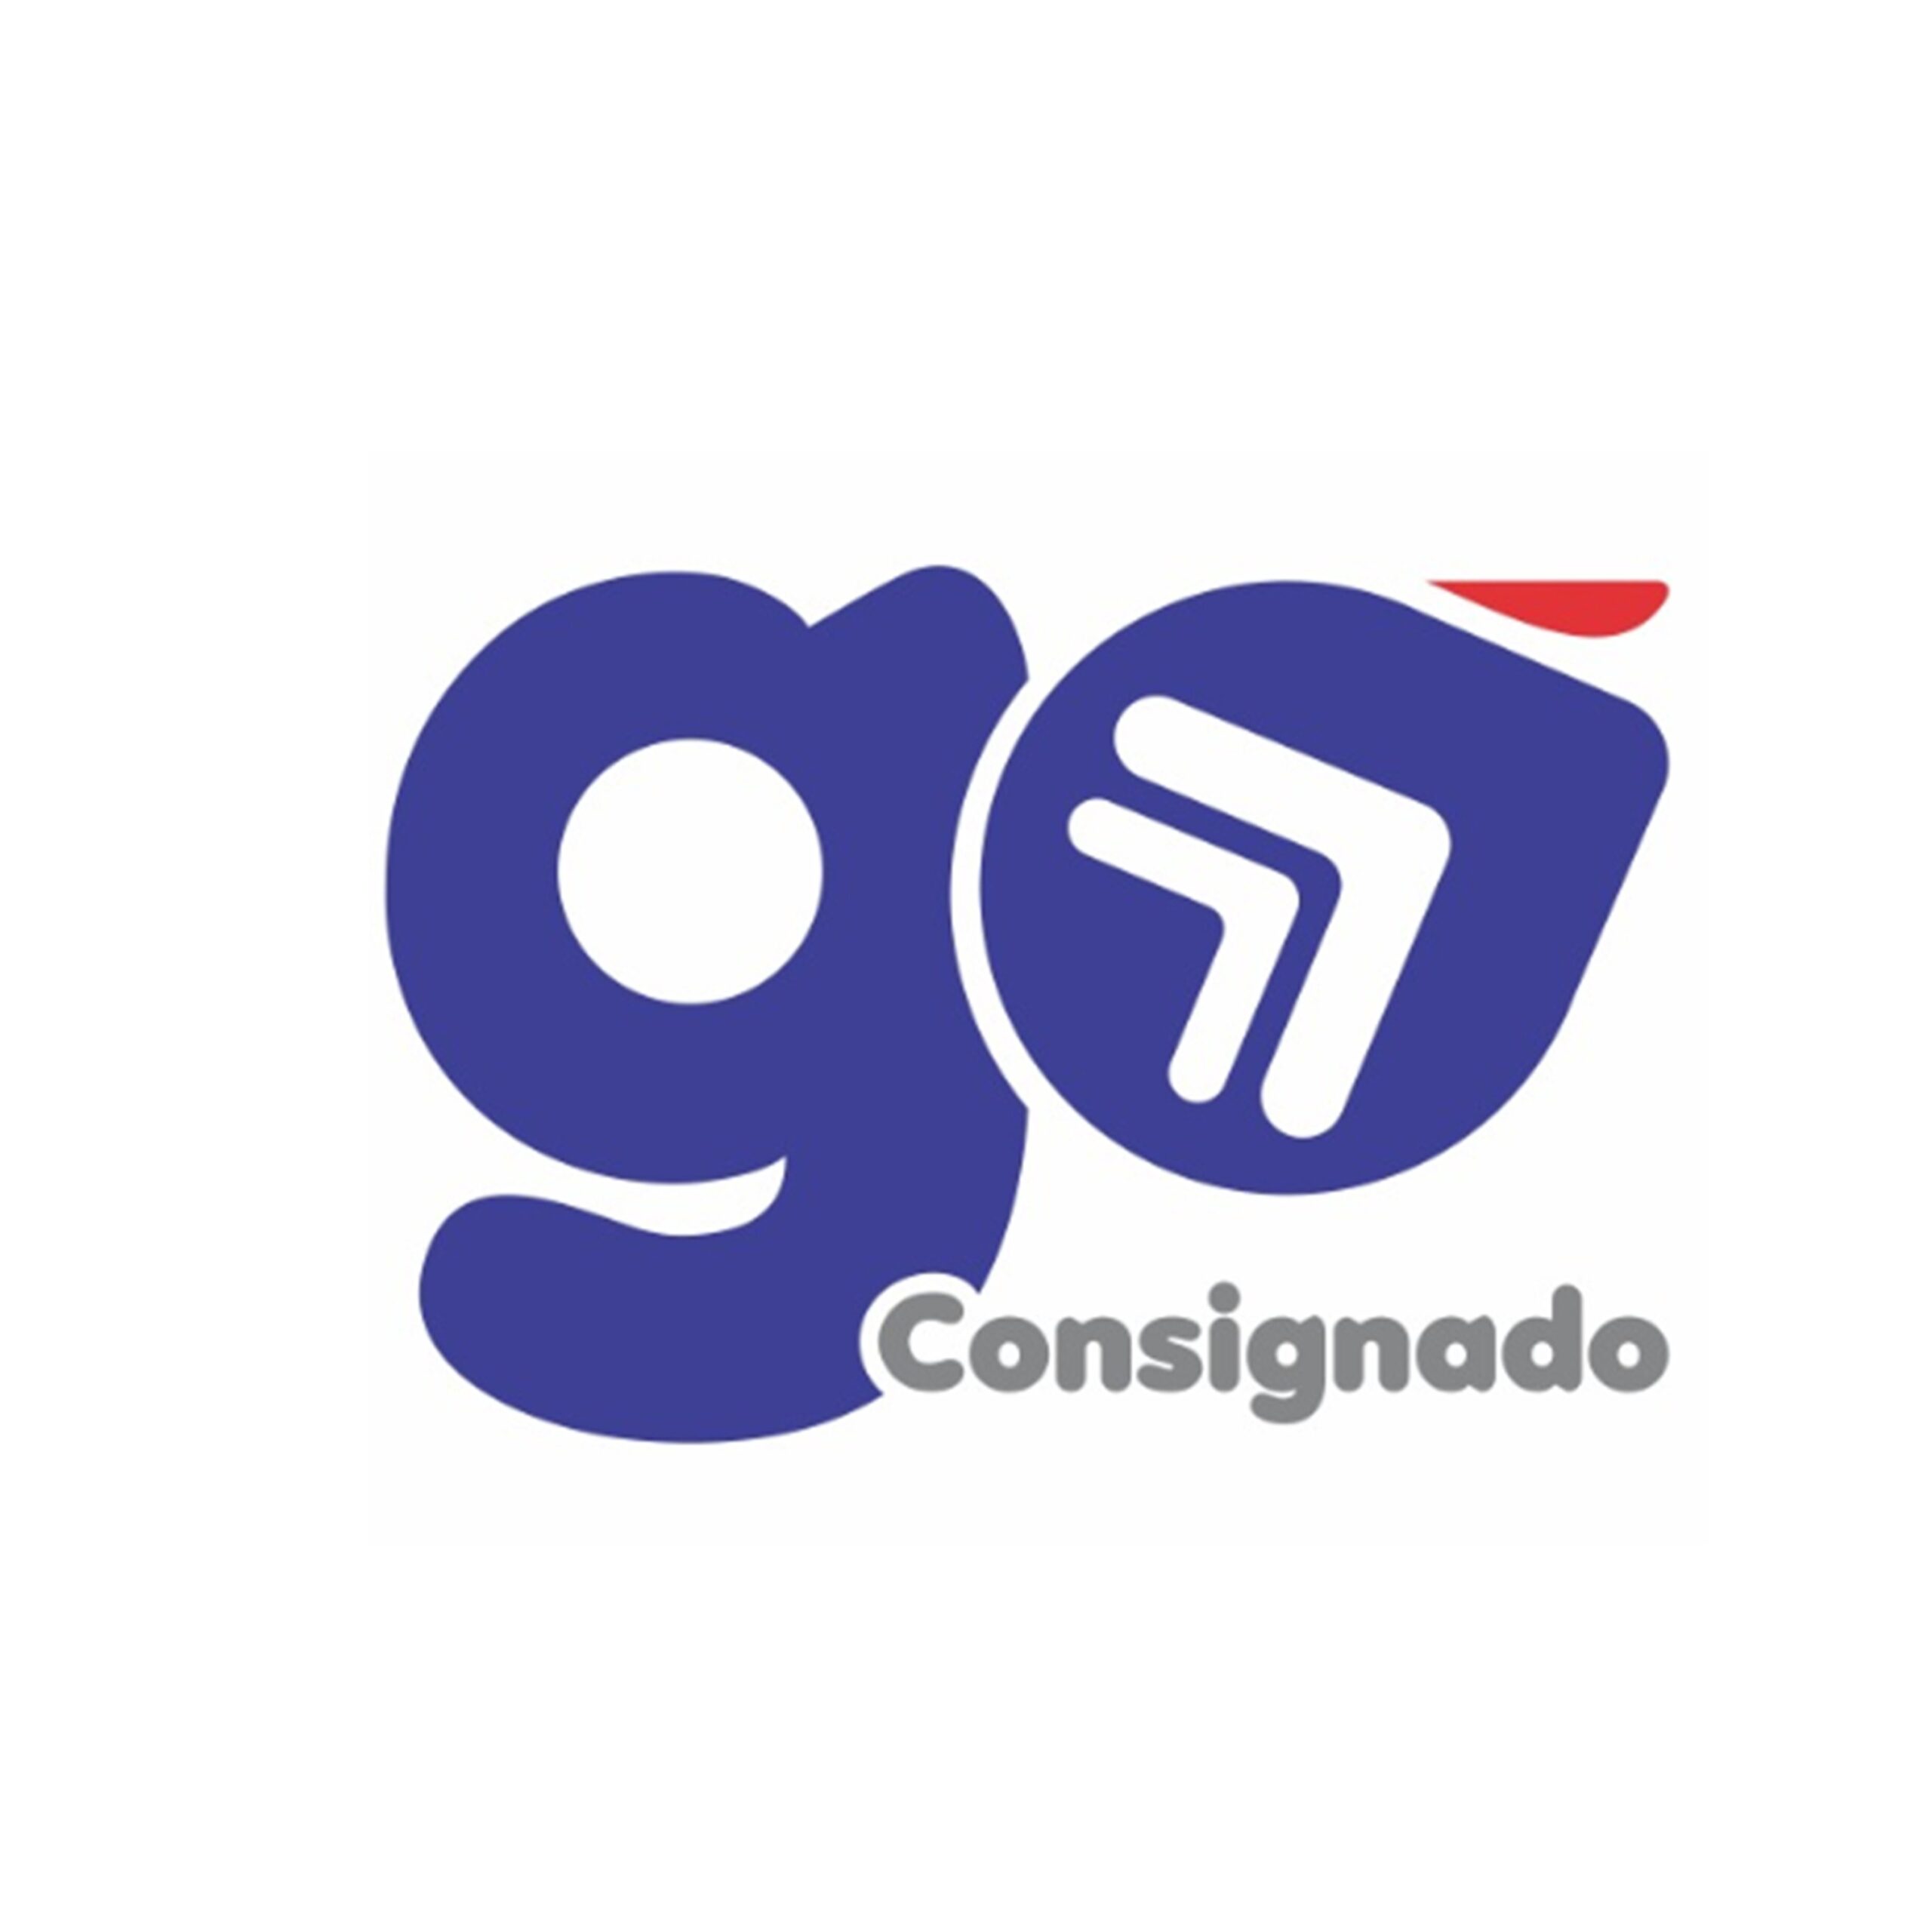 GO CONSIGNADO